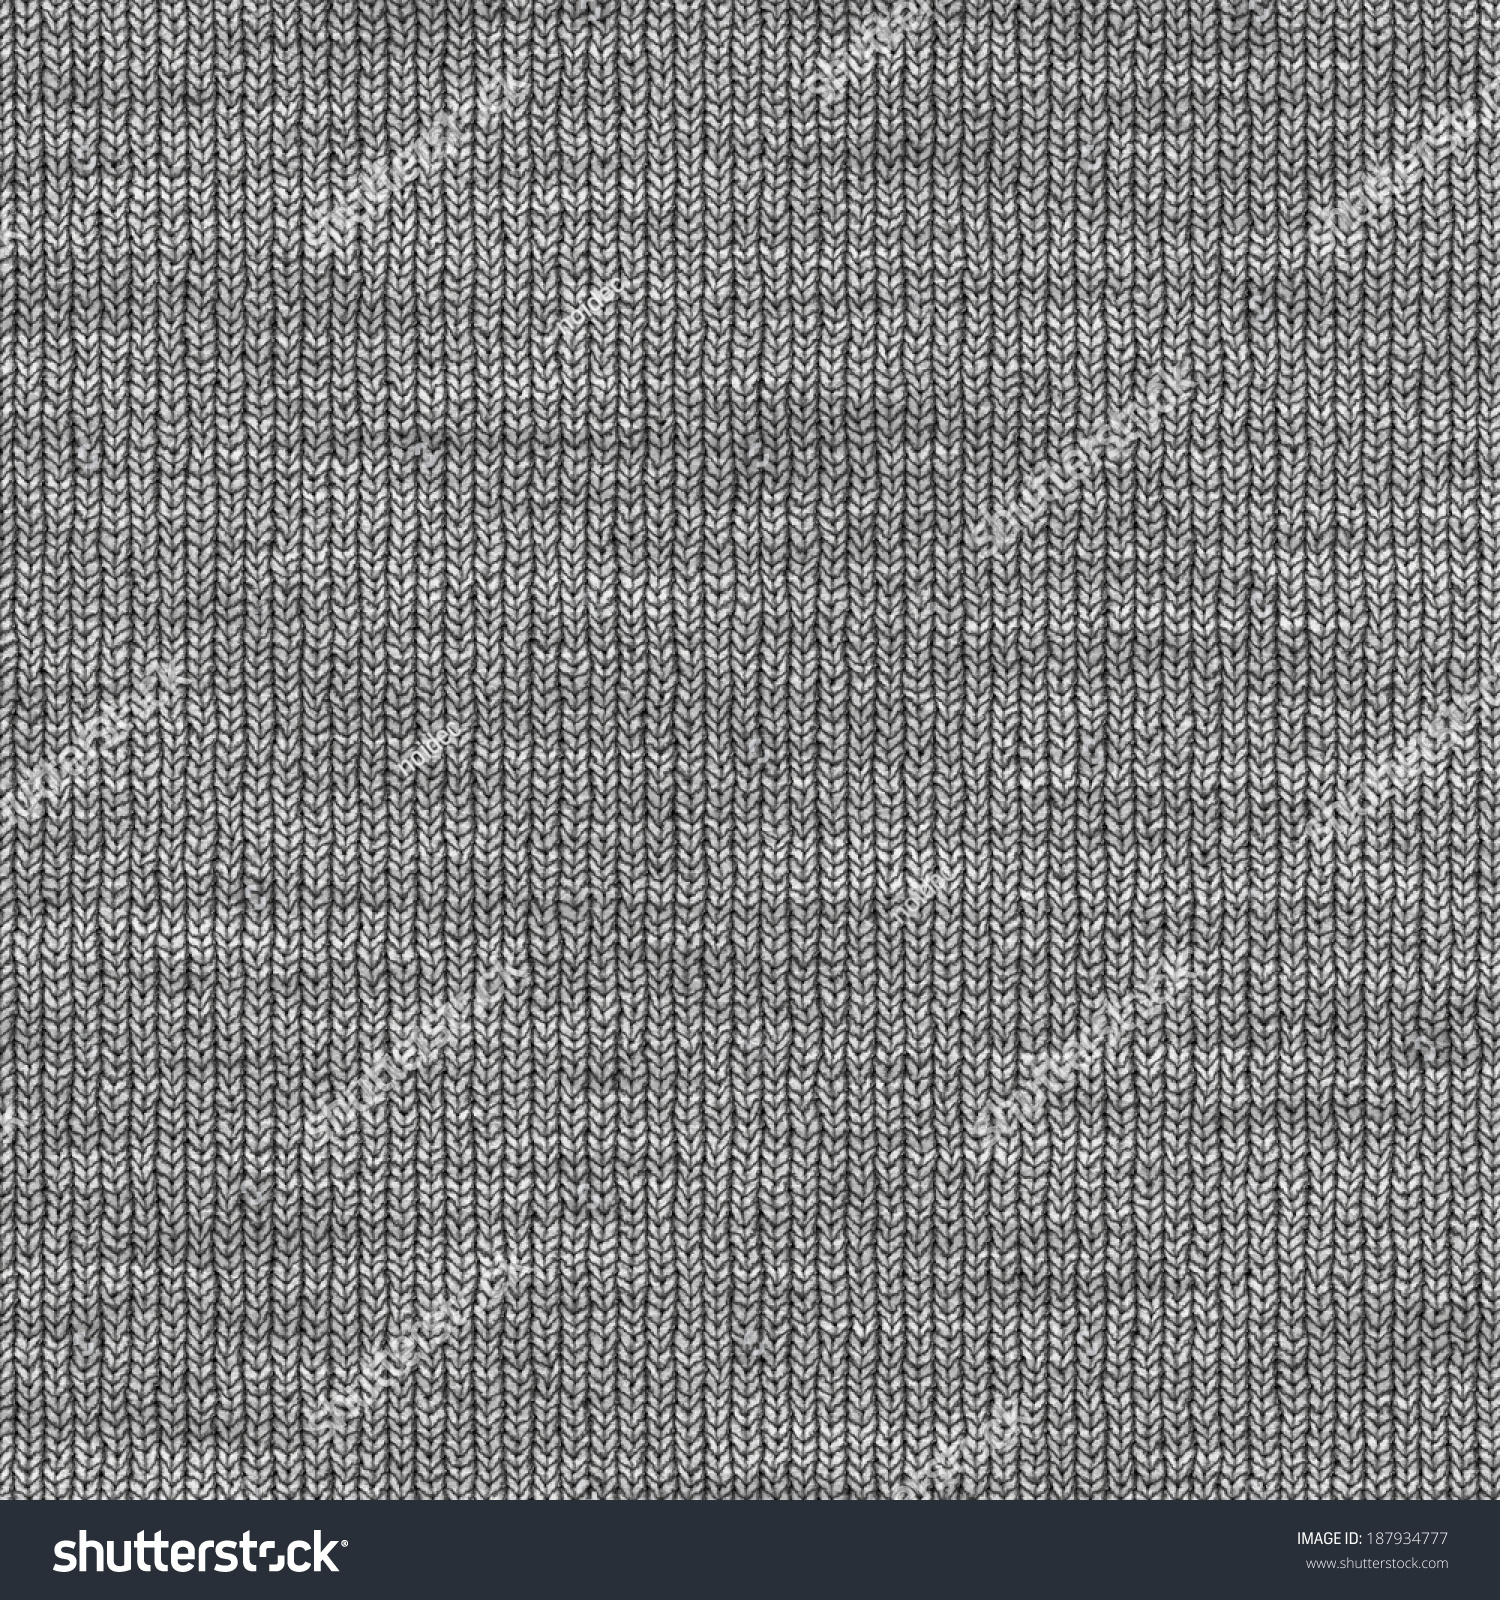 Grey Cotton Seamless Texture Background Stock Illustration 187934777 ...